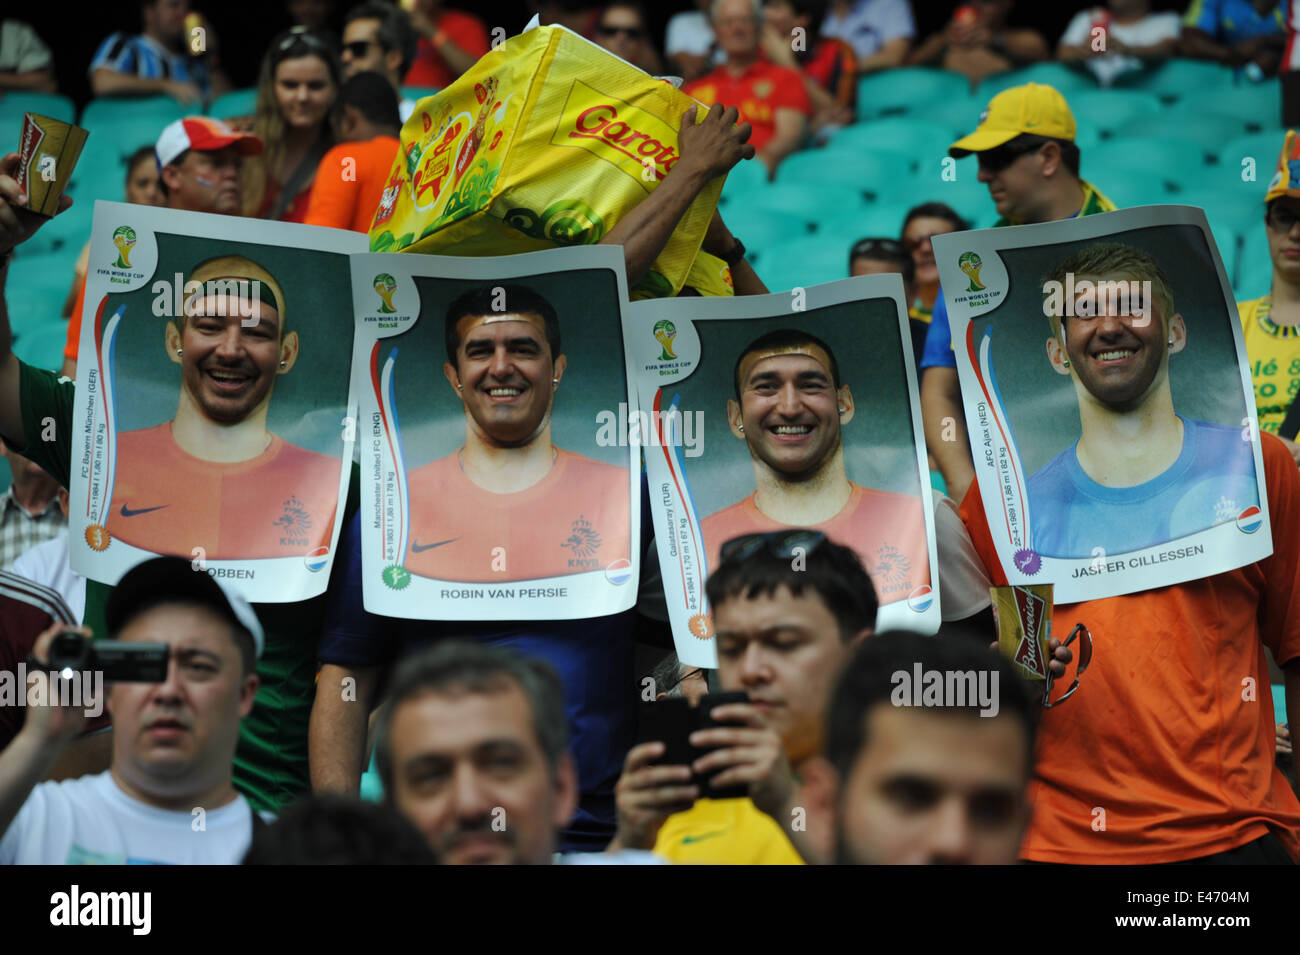 WM 2014, Fans mit Spielerfotos, Salvador da Bahia, Brasilien. Editorial use only. Stock Photo